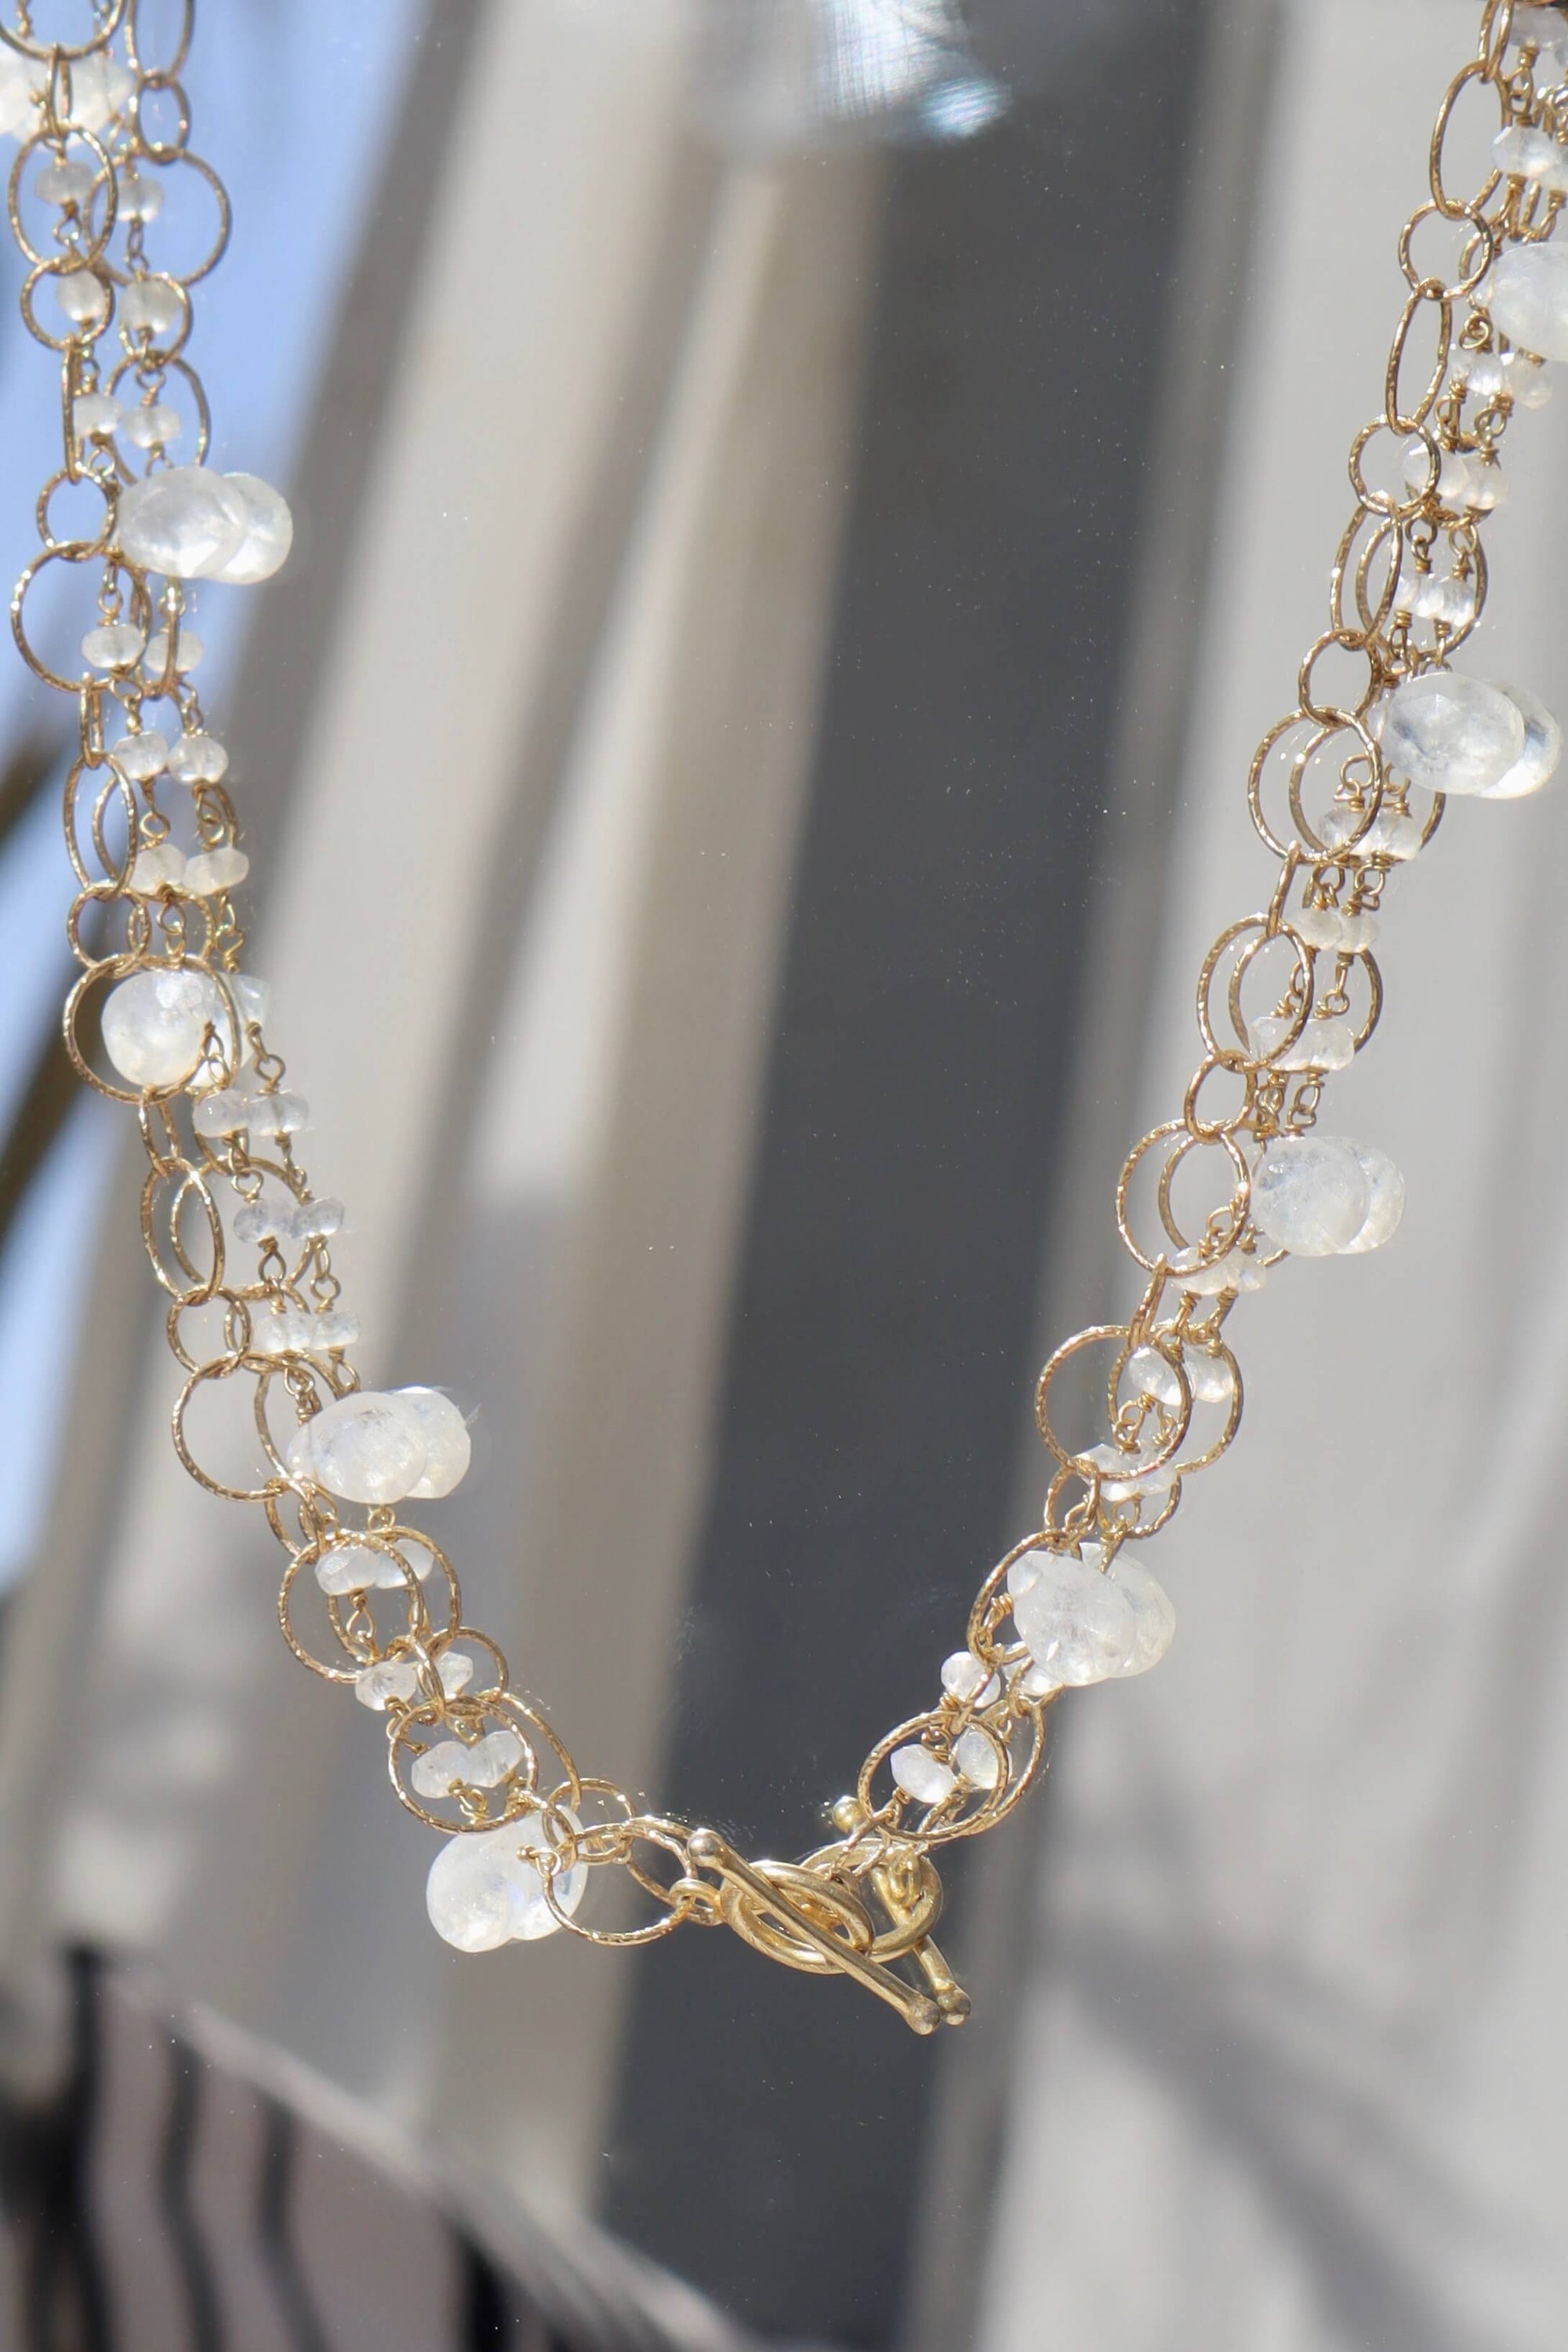 Double chain bubble necklace, moonstone.